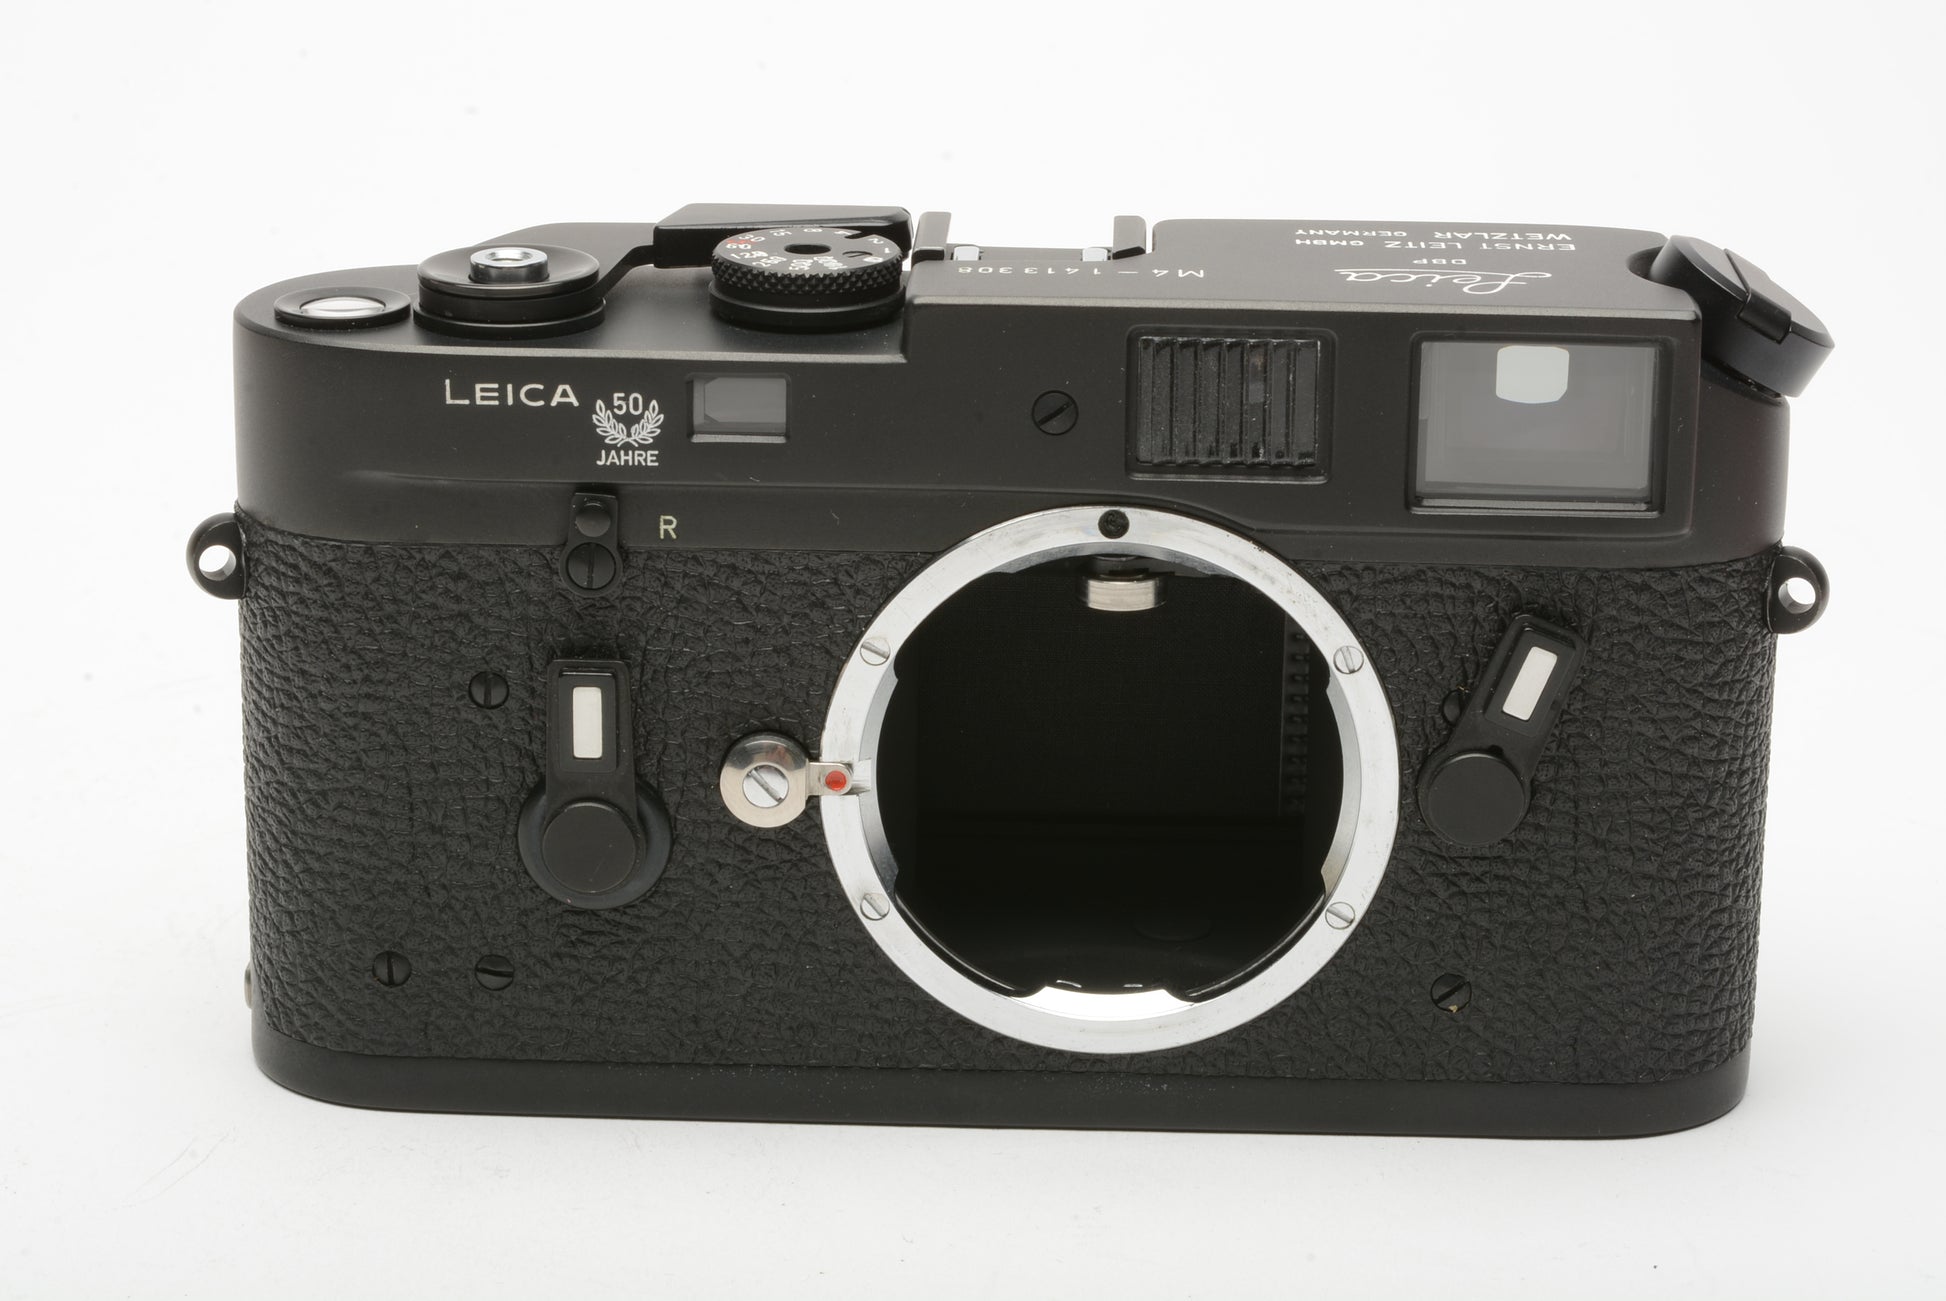 Leica M10 chrome #20001 Digital body, 2batts, thumb grip, boxed